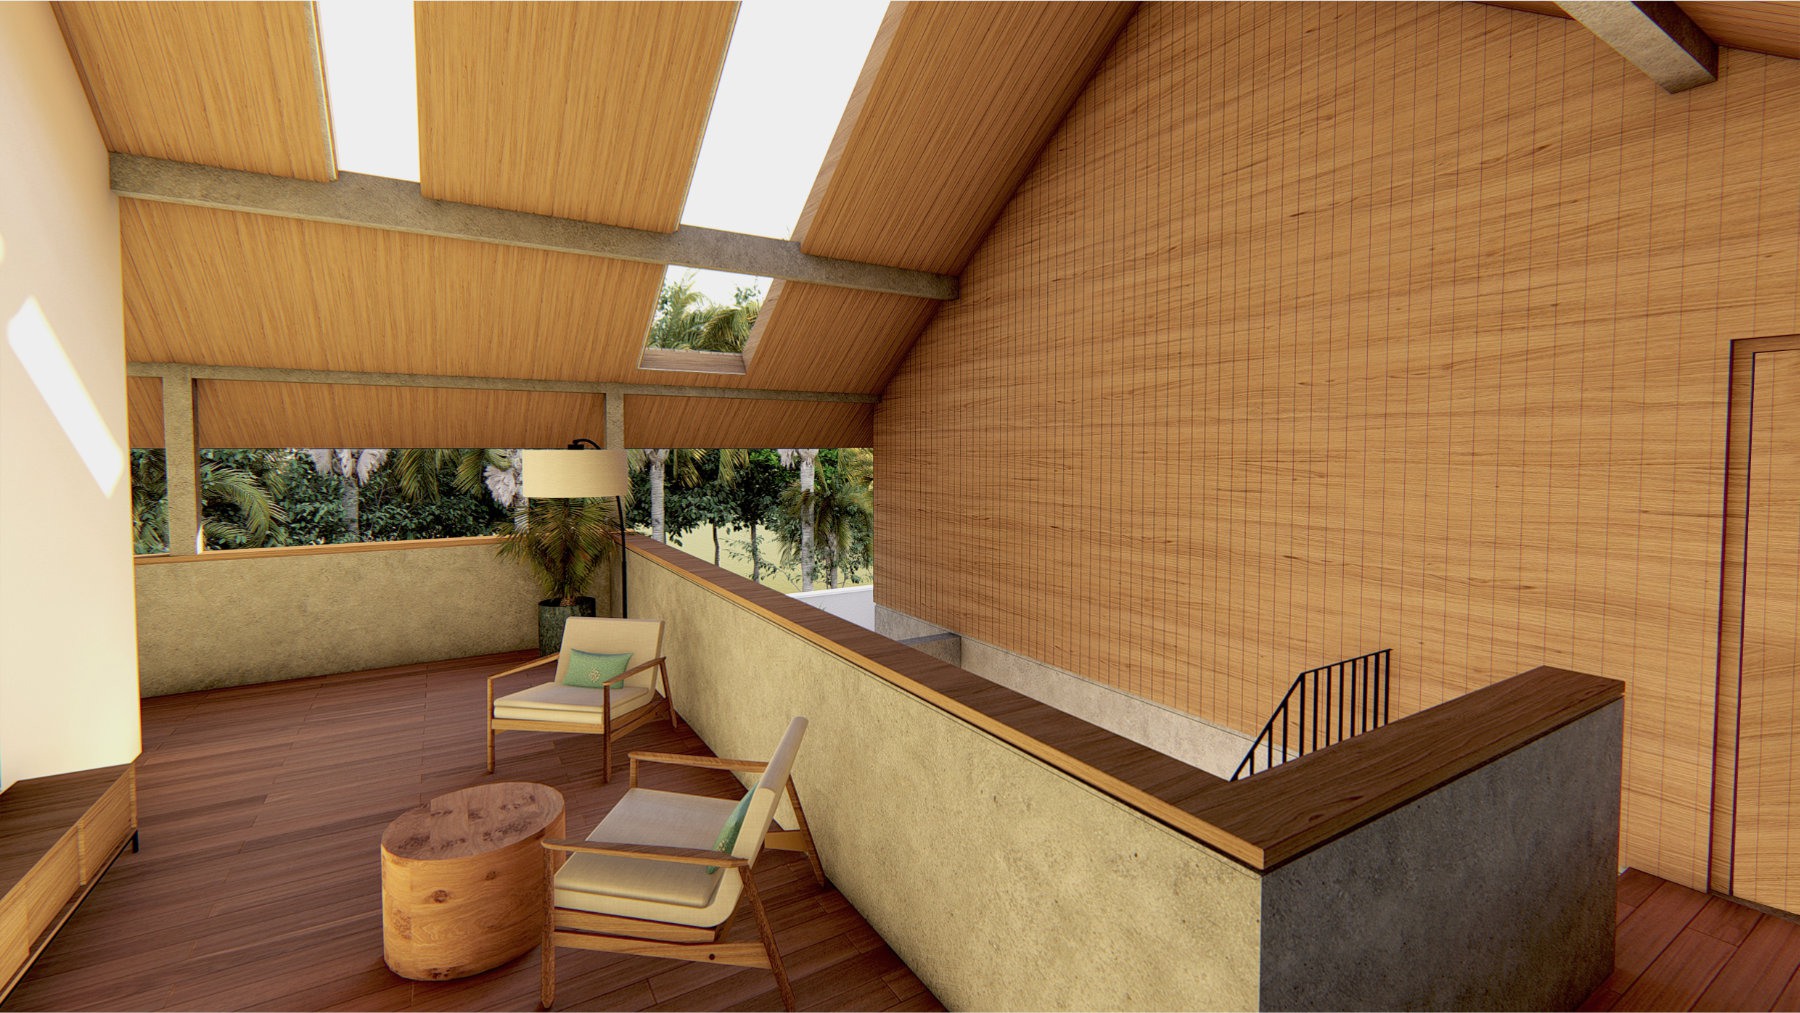 Design Assembly - Cepaka Villa - Bali Architect - Interior Design - Bali Villa - Living Room